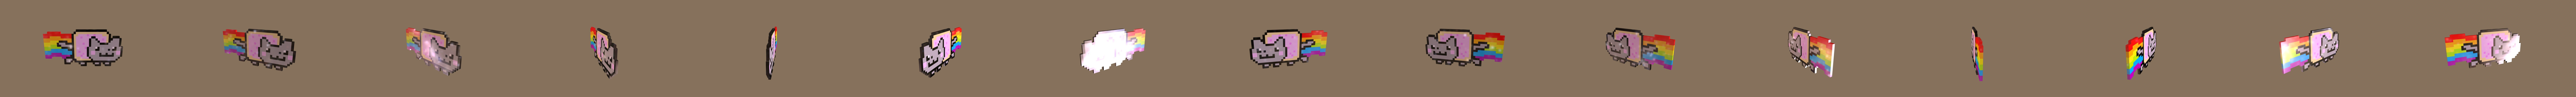 Pixilart - Nyan Cat - Pixel Art by TheCatLover57